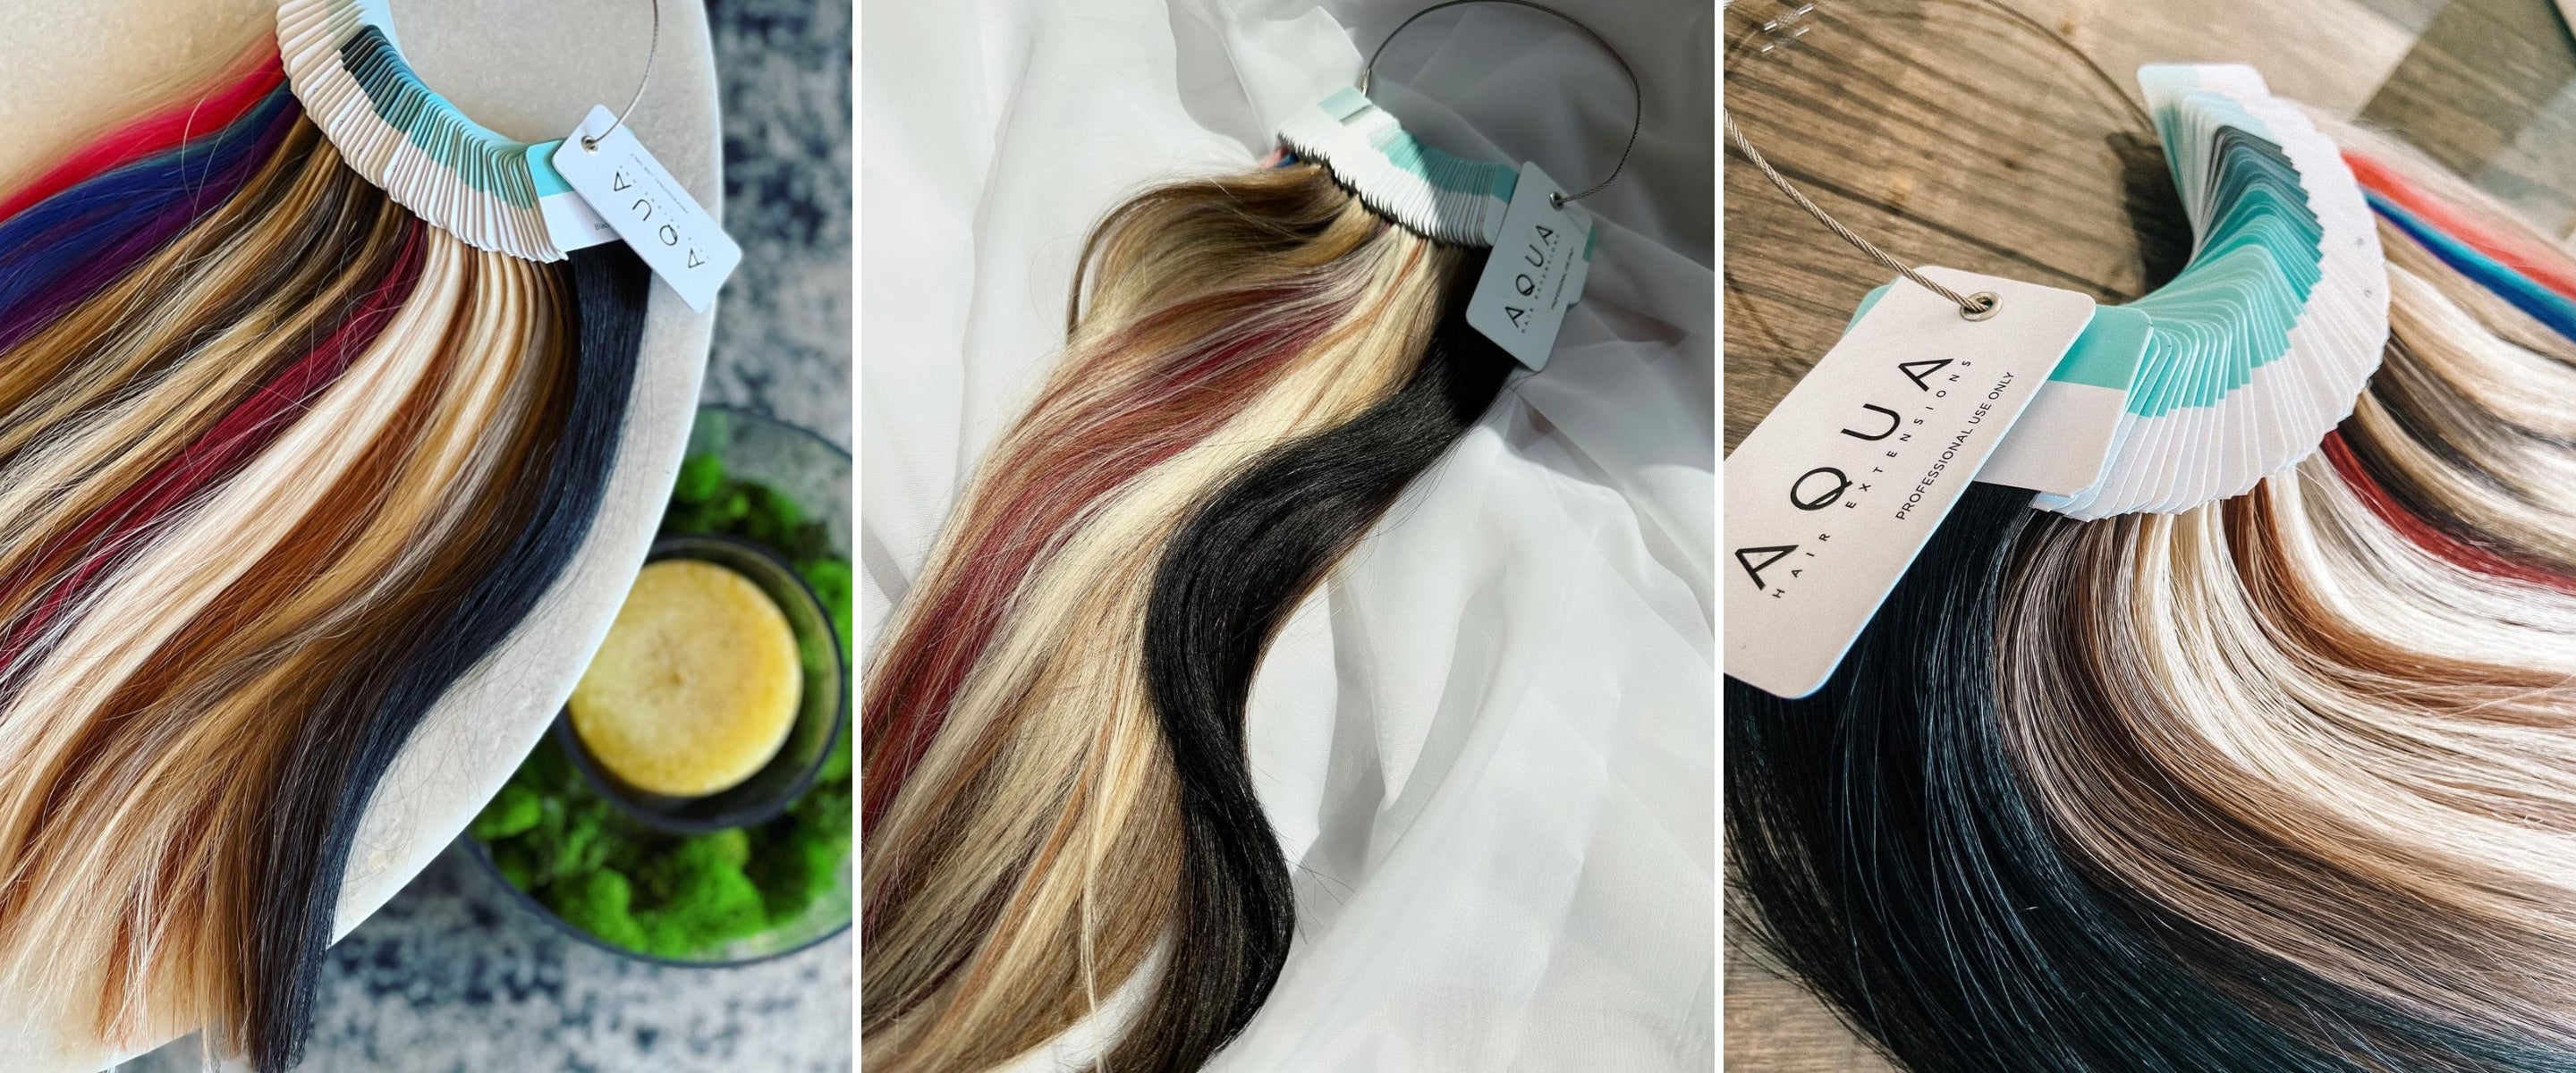 Thread – Aqua Hair Extensions